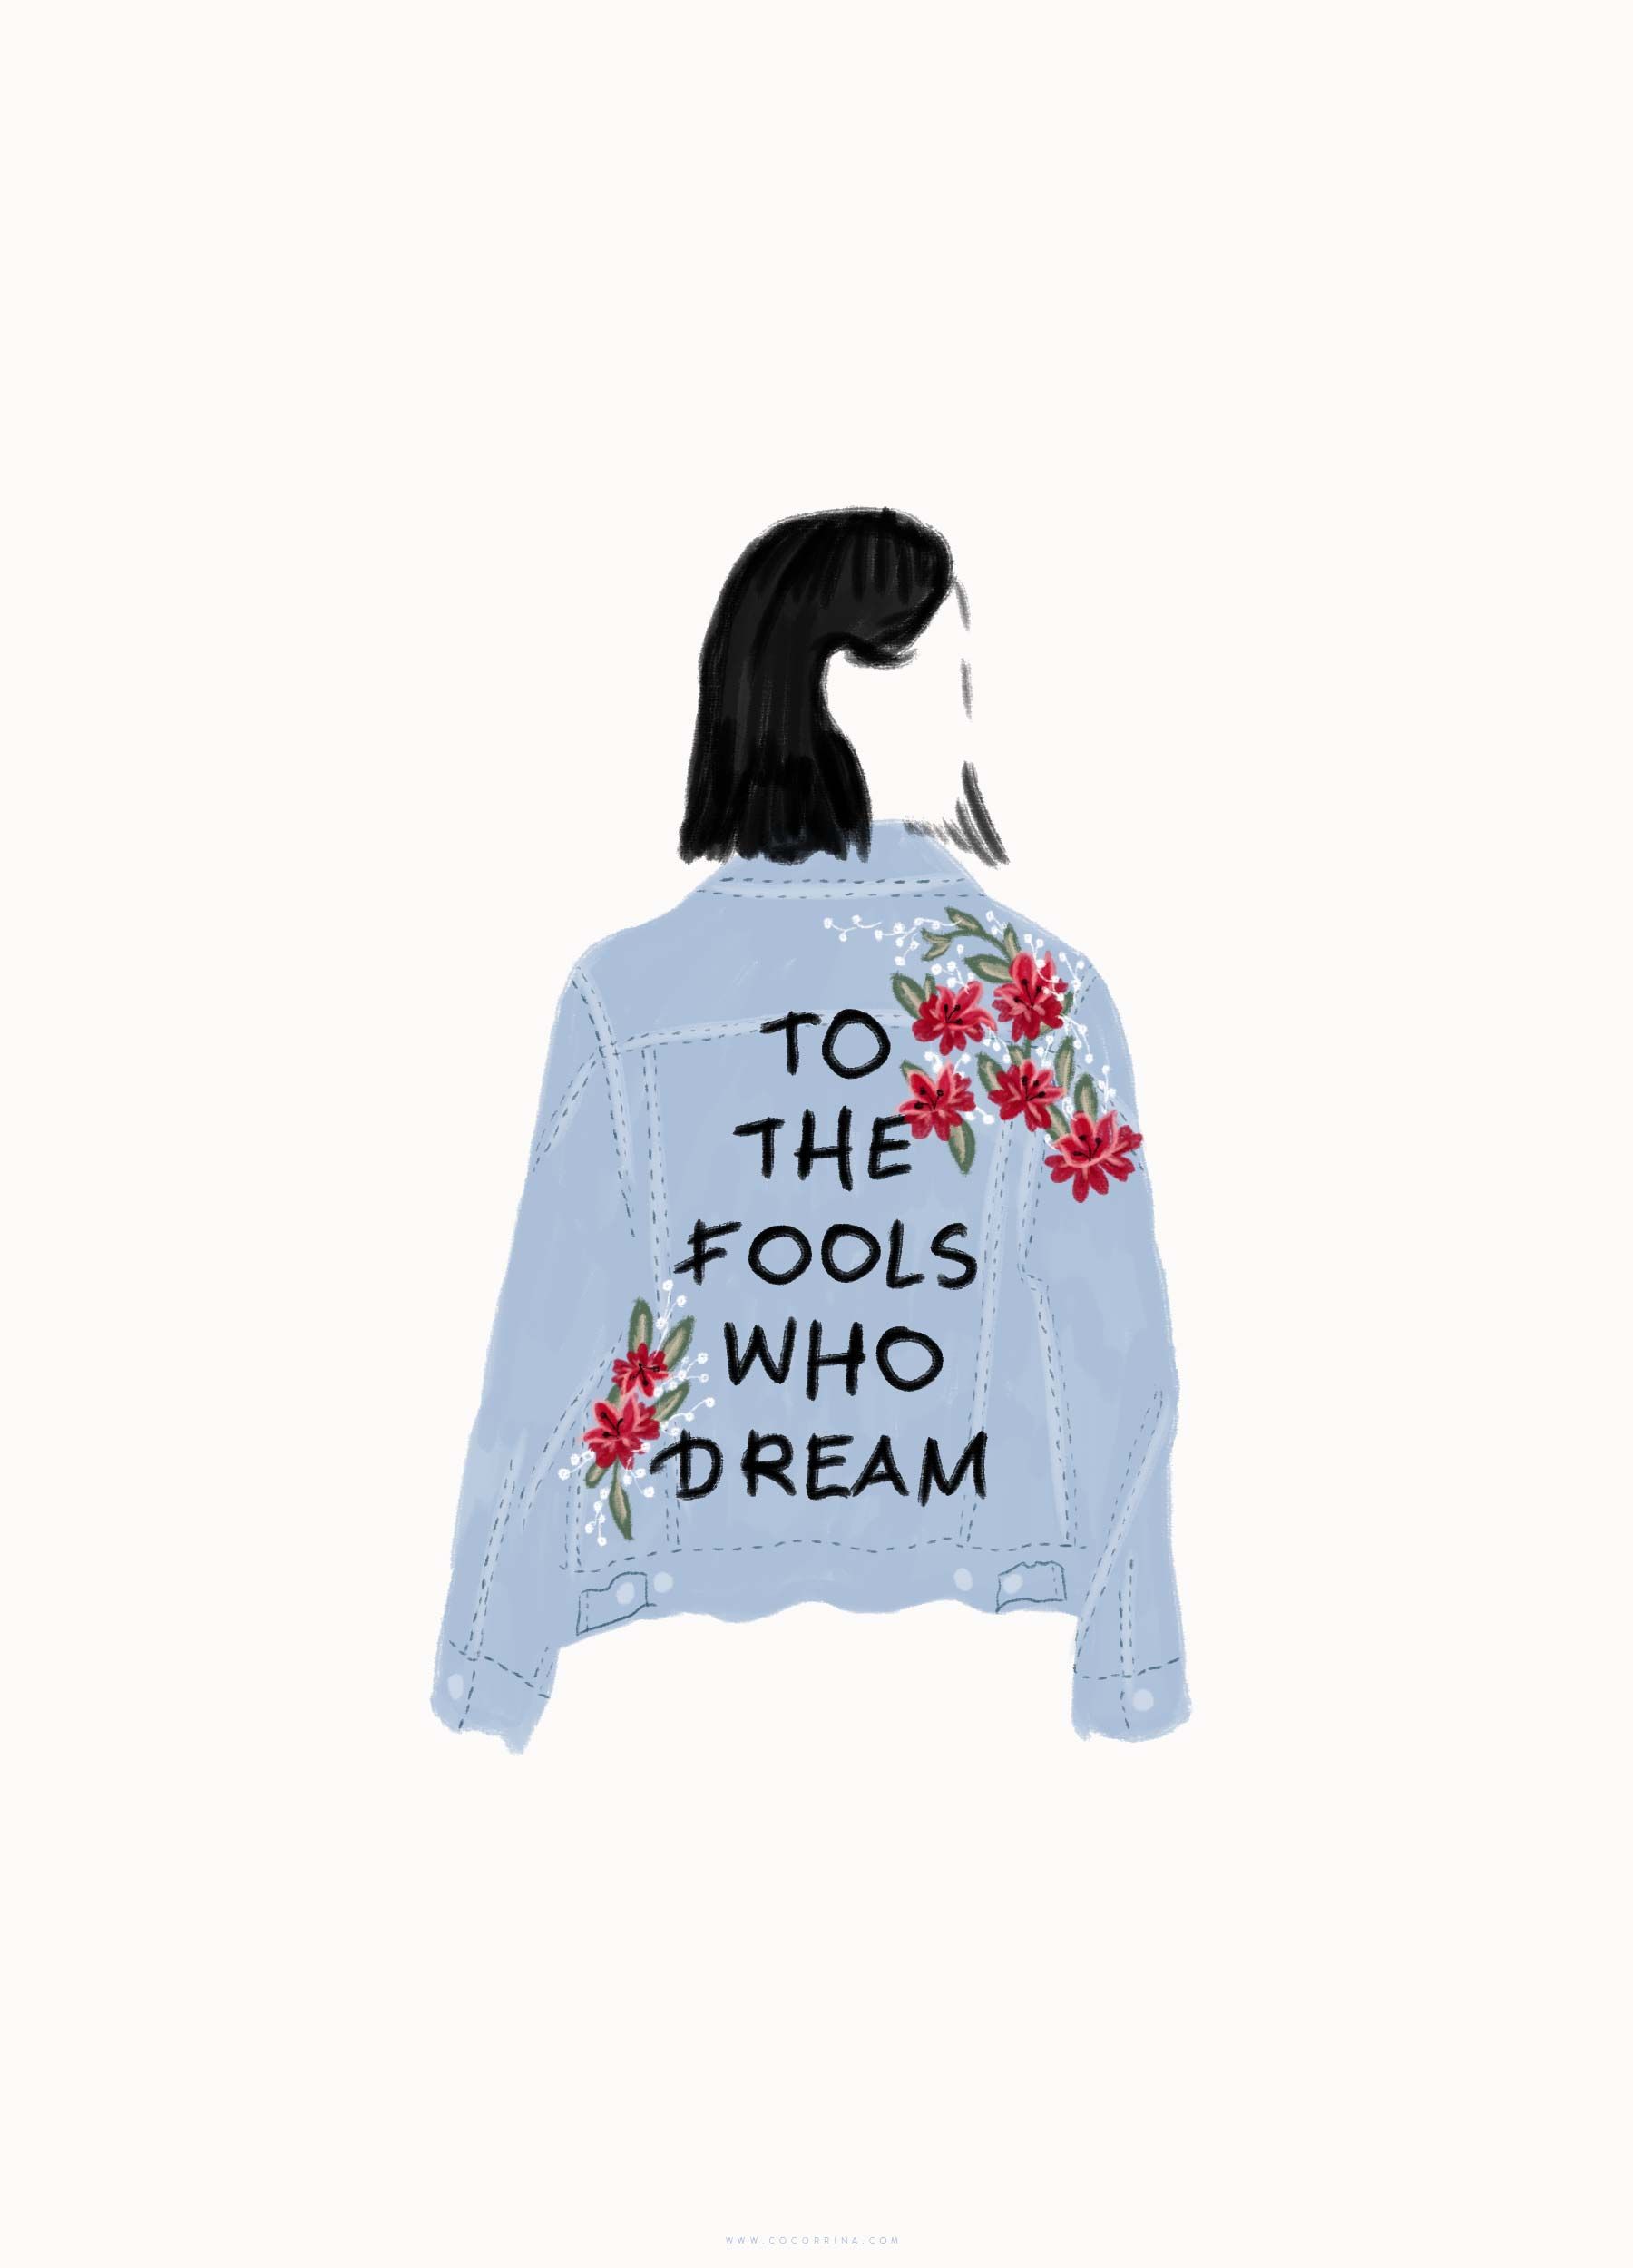 To the fools who dream / La La Land Jacket Illustration by Cocorrina